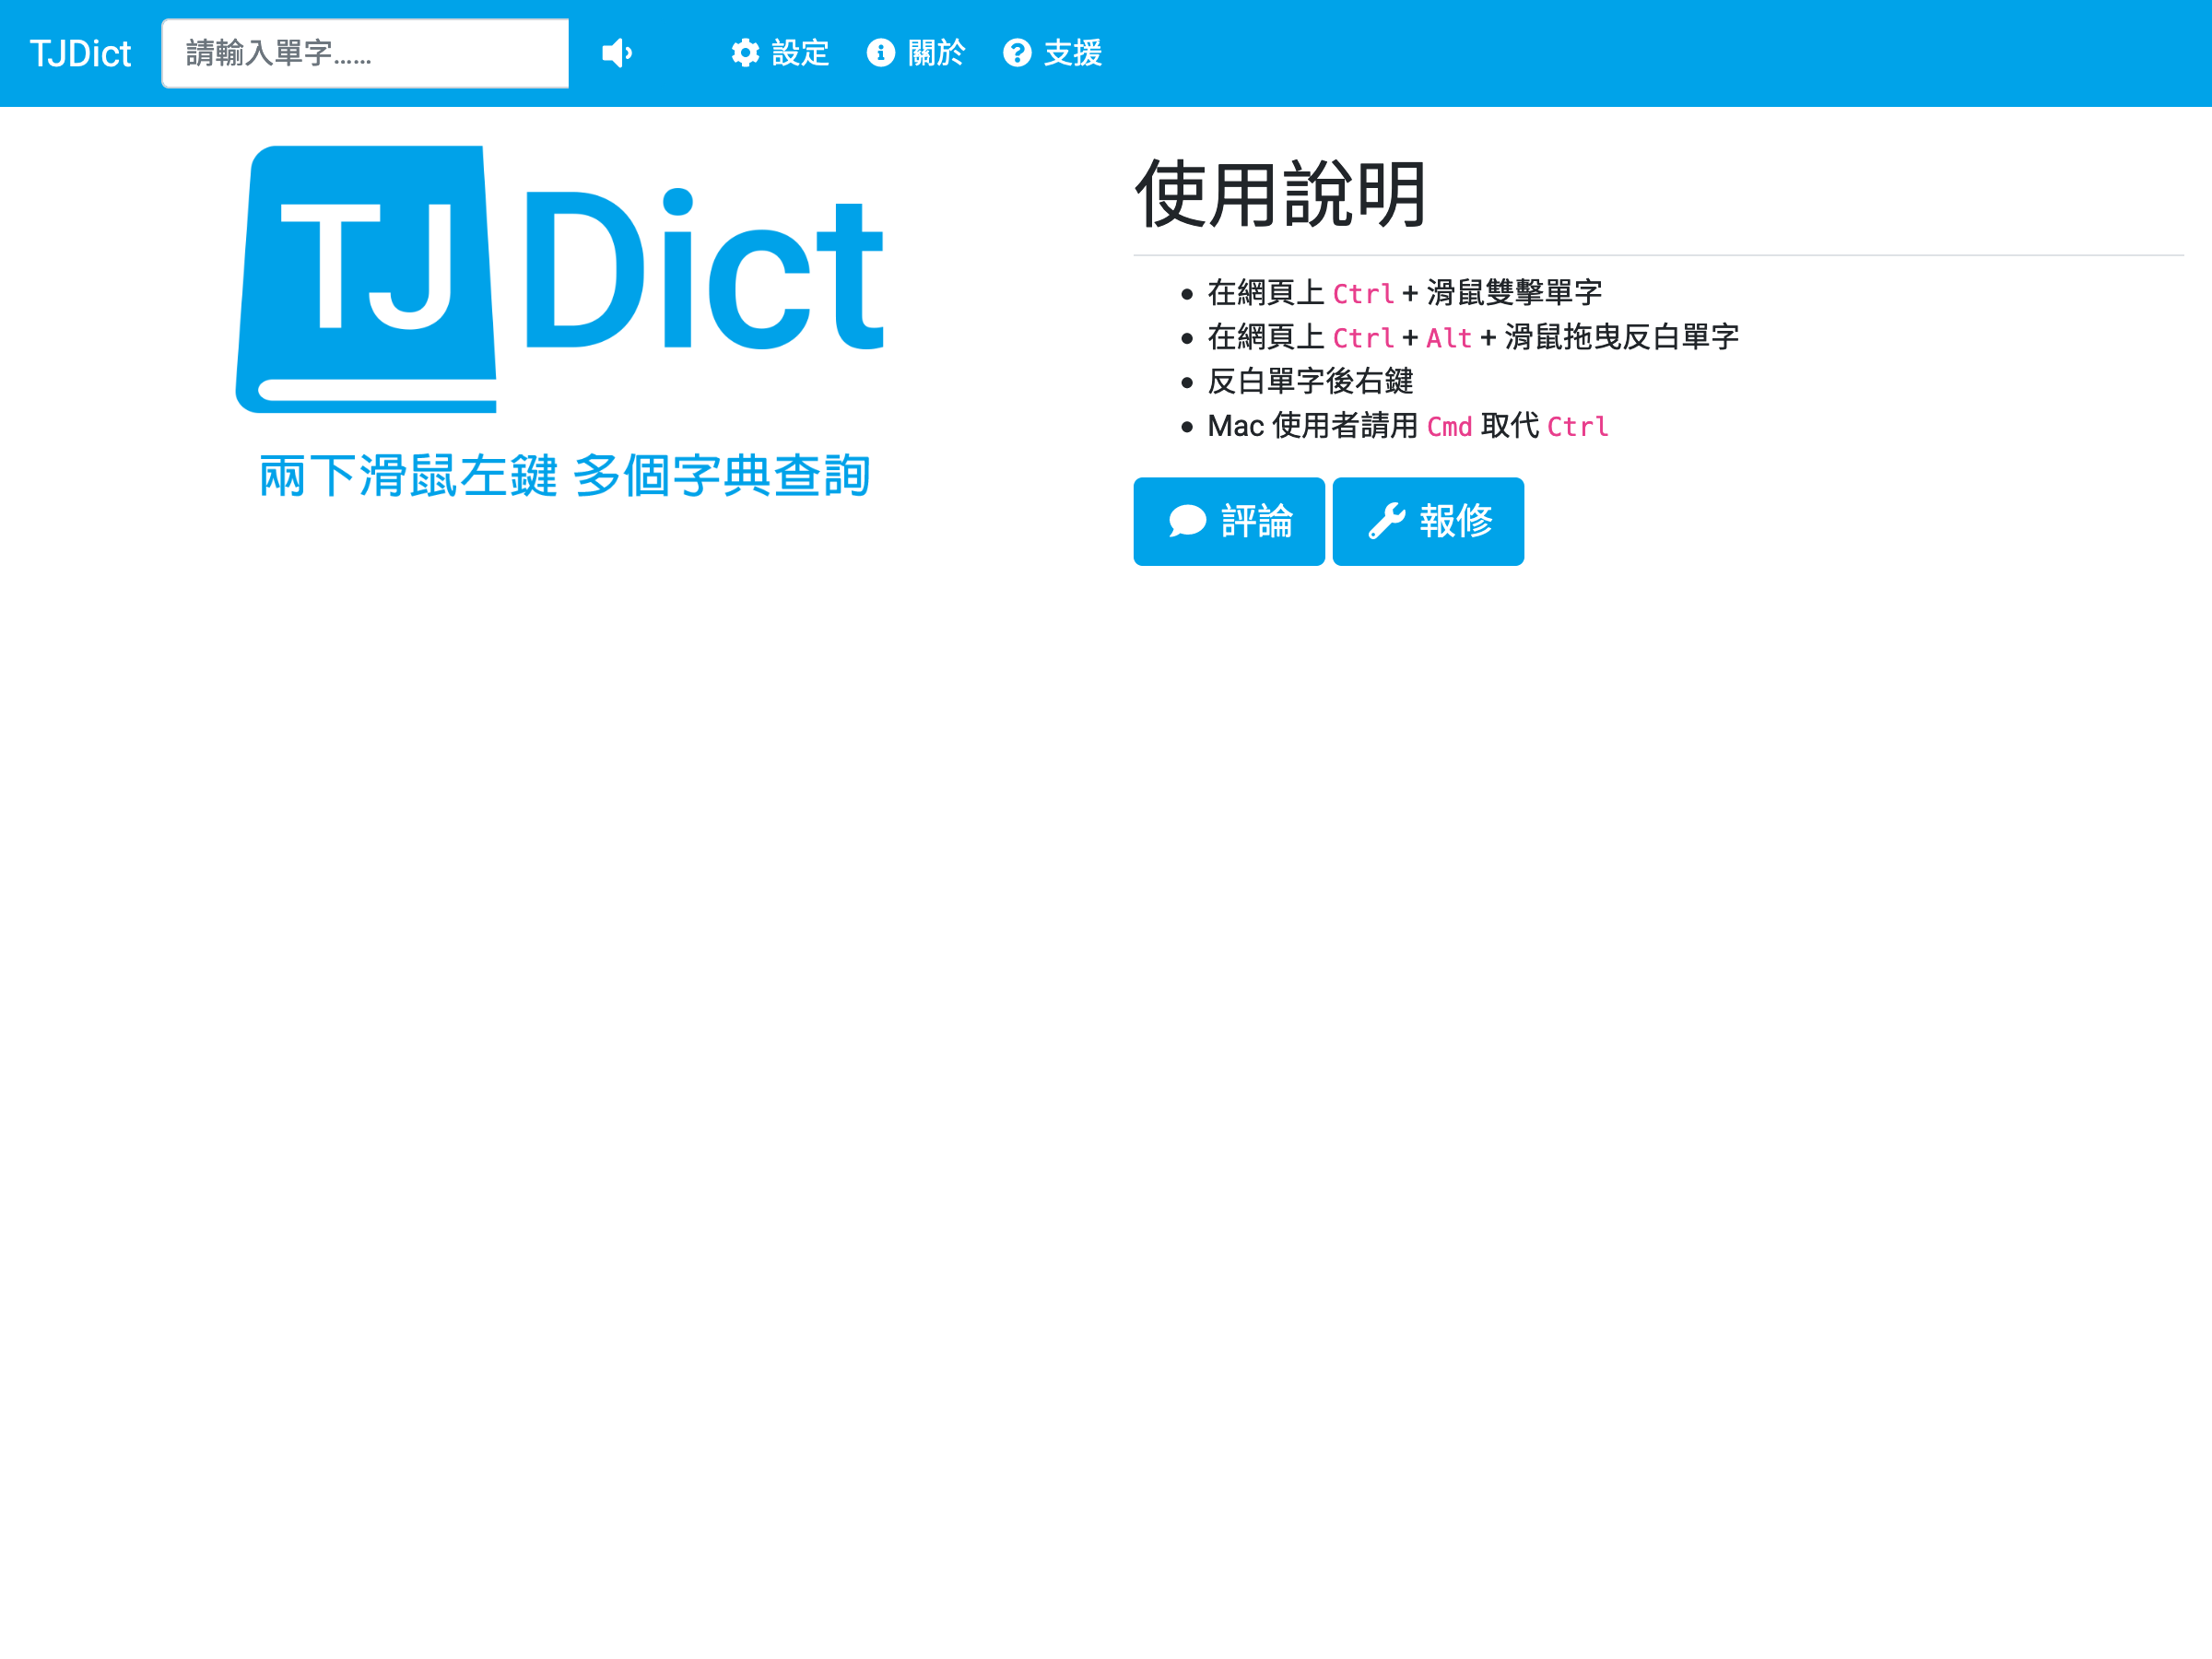 TJDict 線上字典 promo image